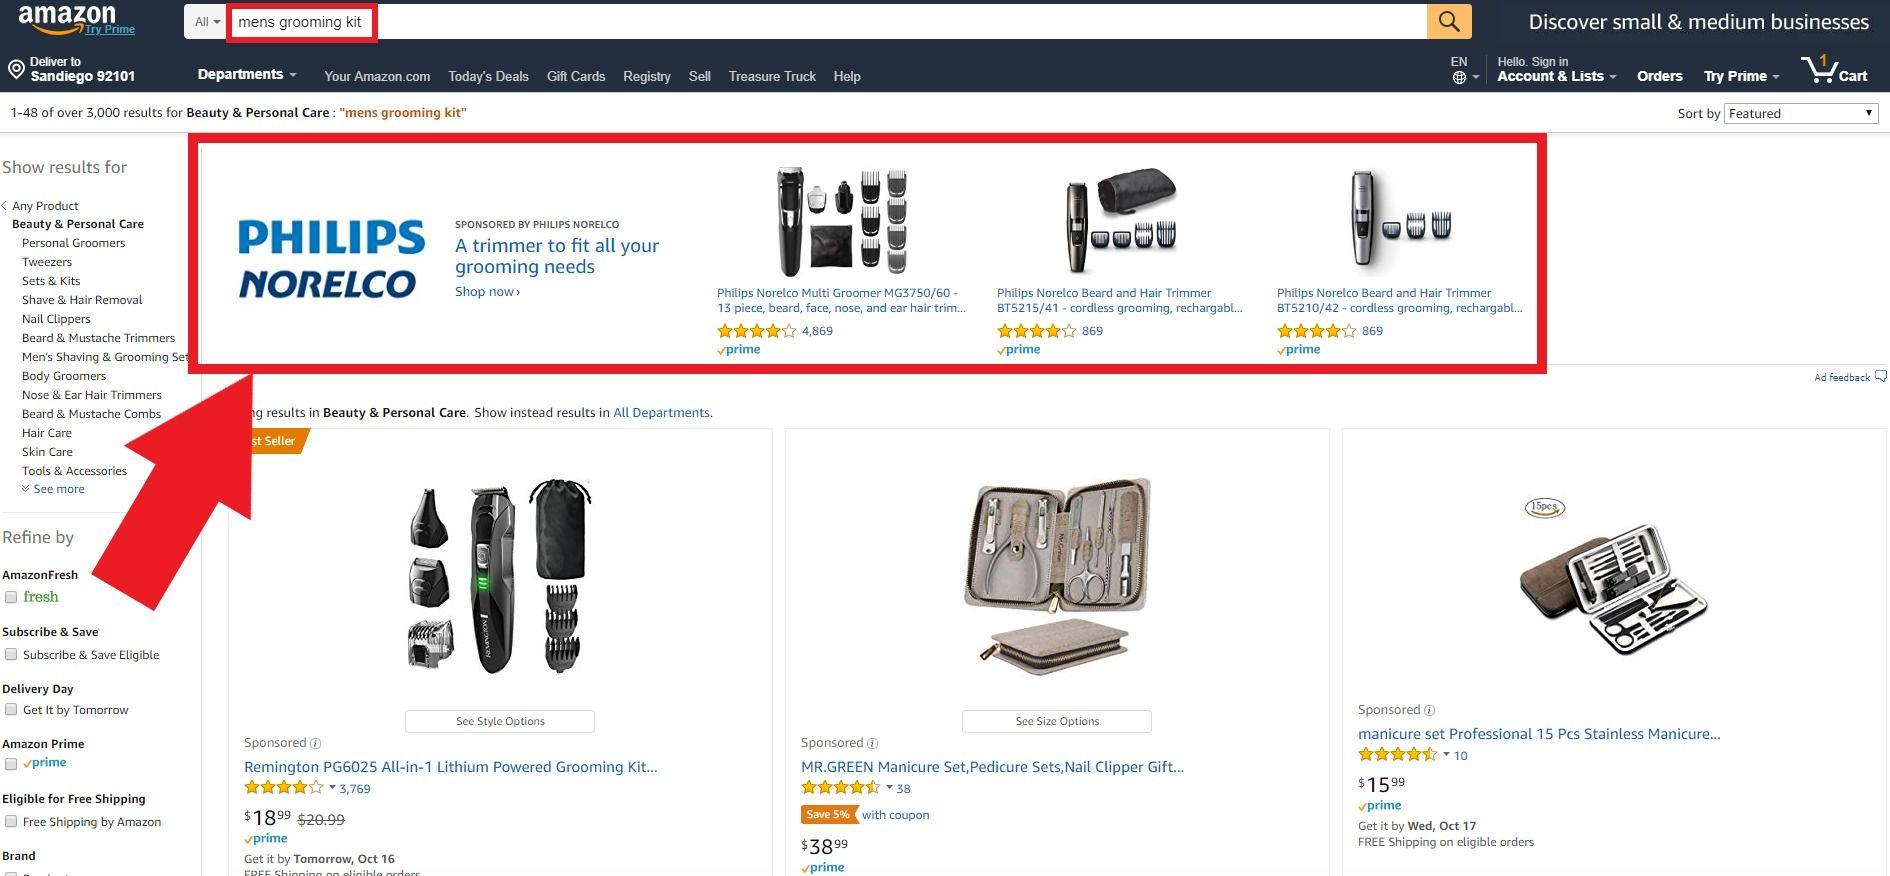 Search Amazon Logo - Complete Guide to Amazon Headline Search Ads + 7 Optimization Tips